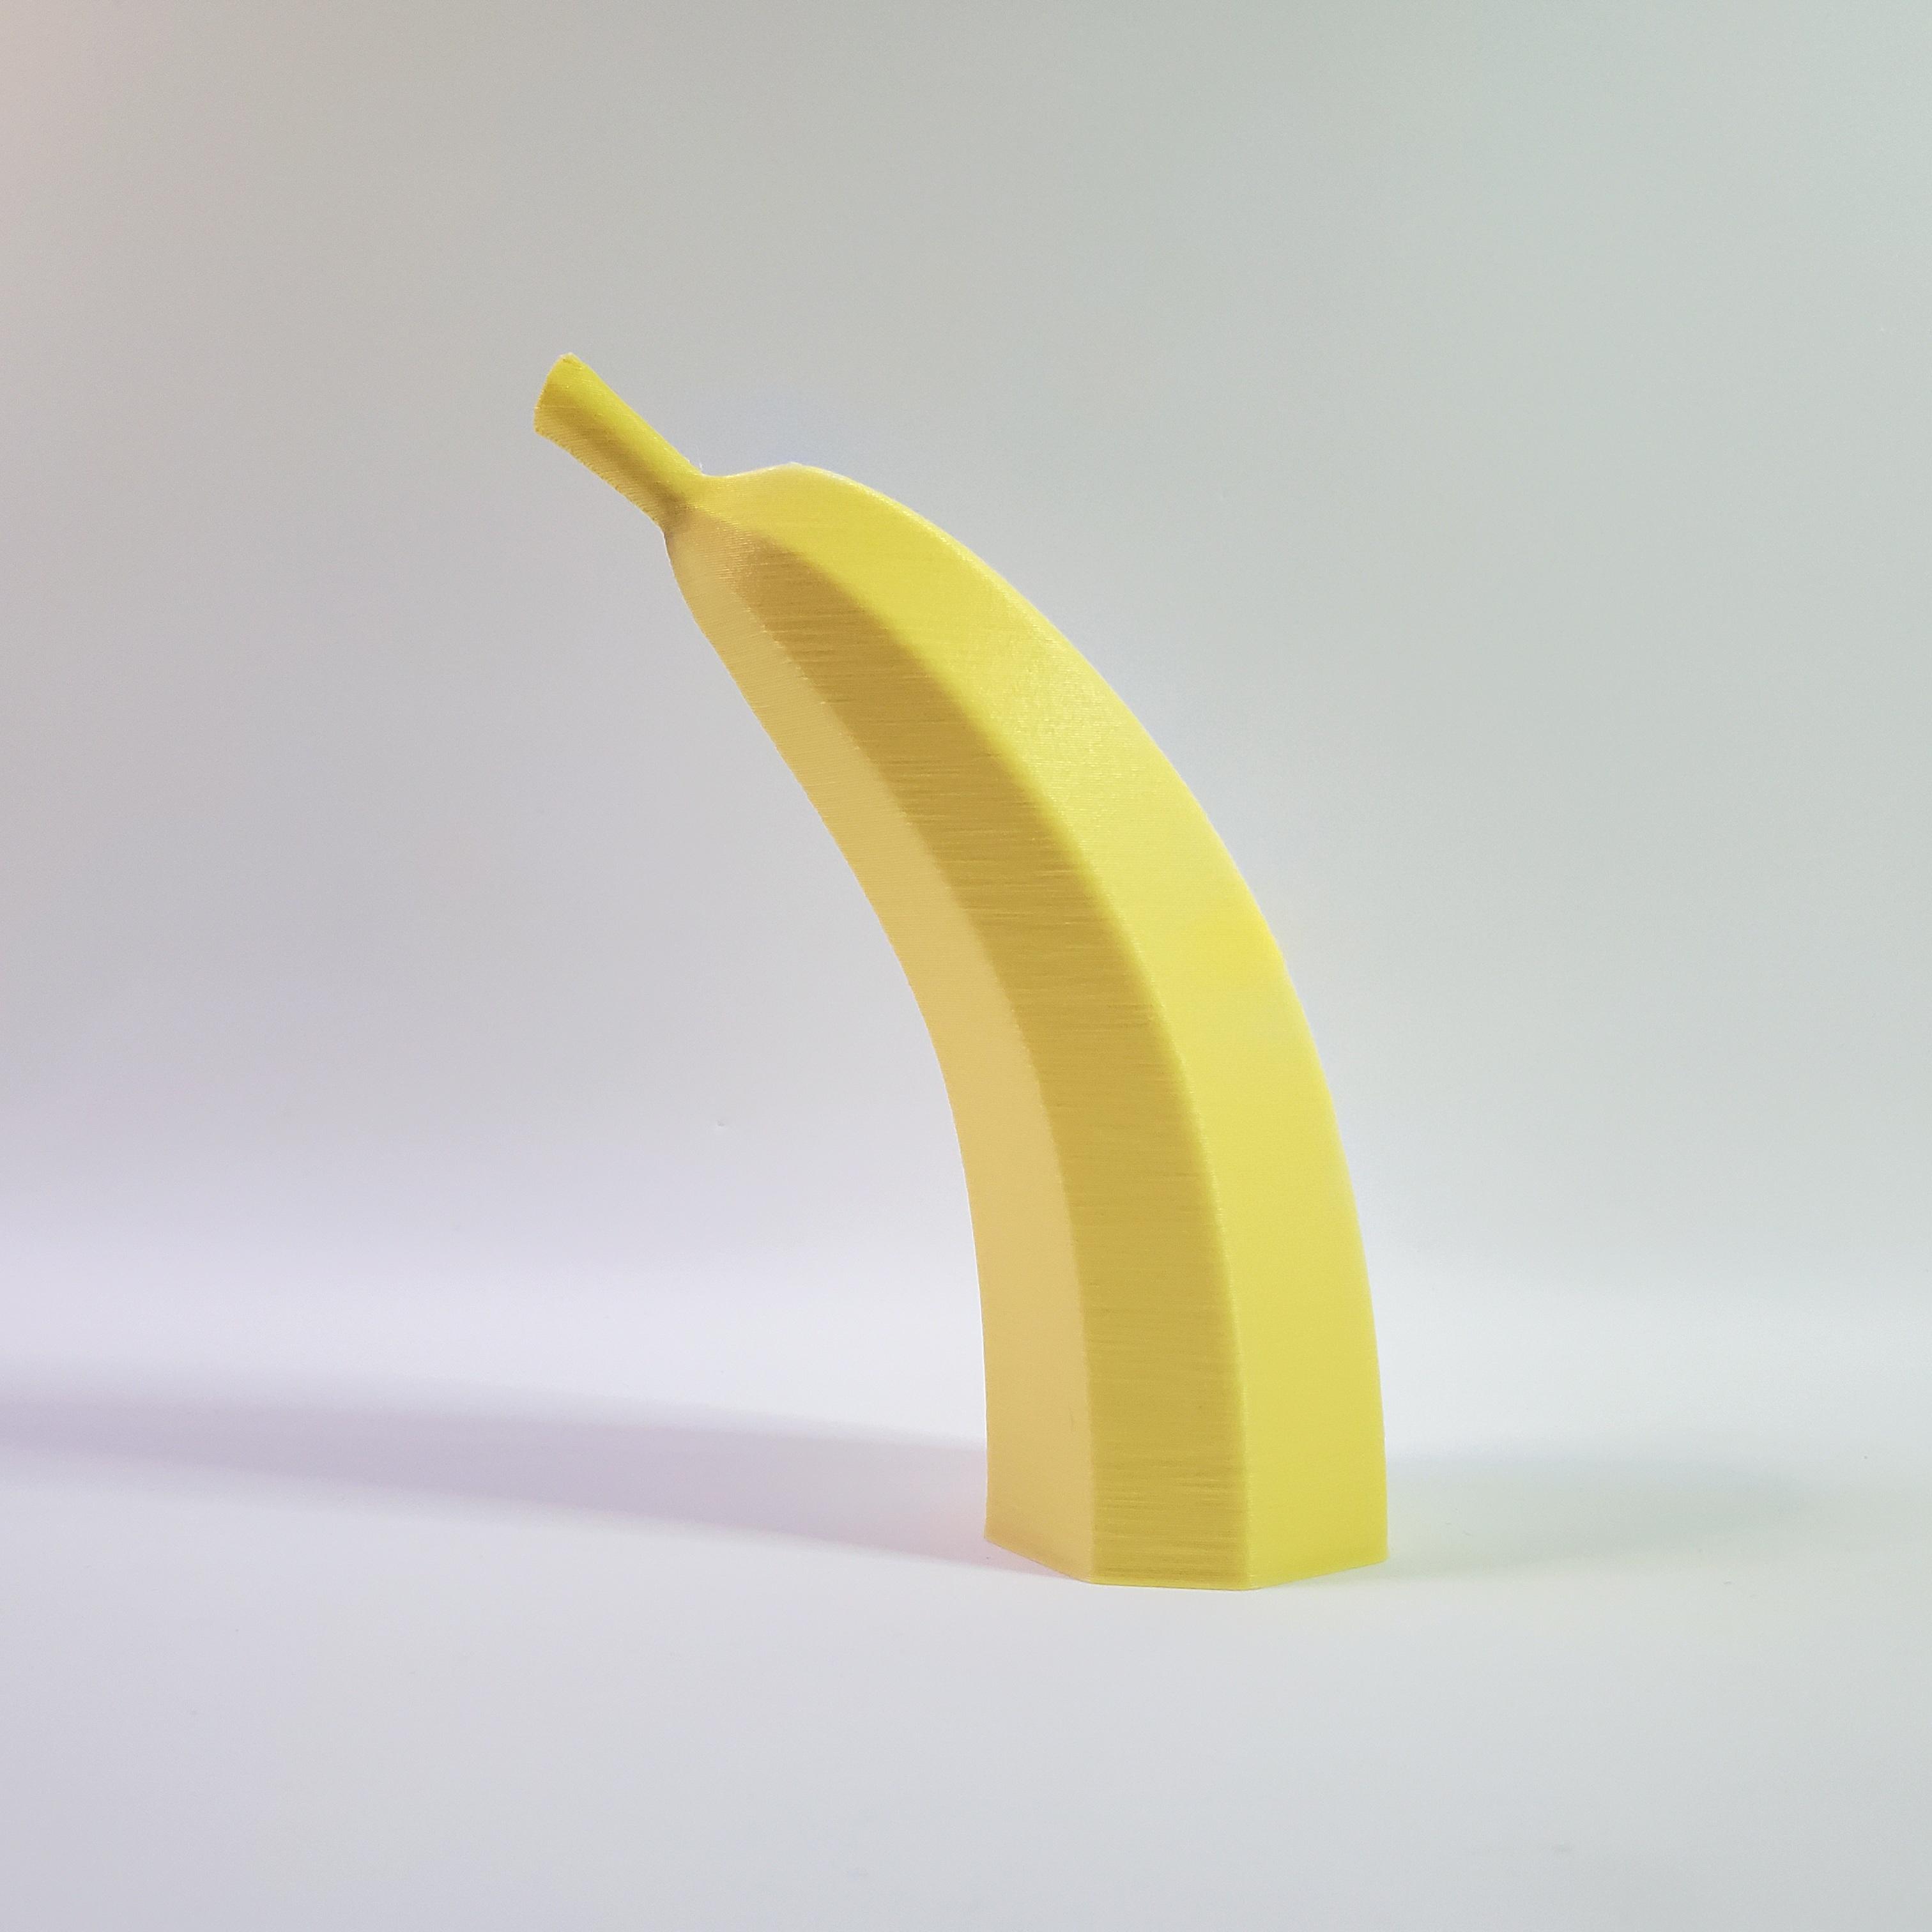 Hanging Banana Decorative Food-Themed Wall Art :: LOW-HANGING FRUIT 3d model